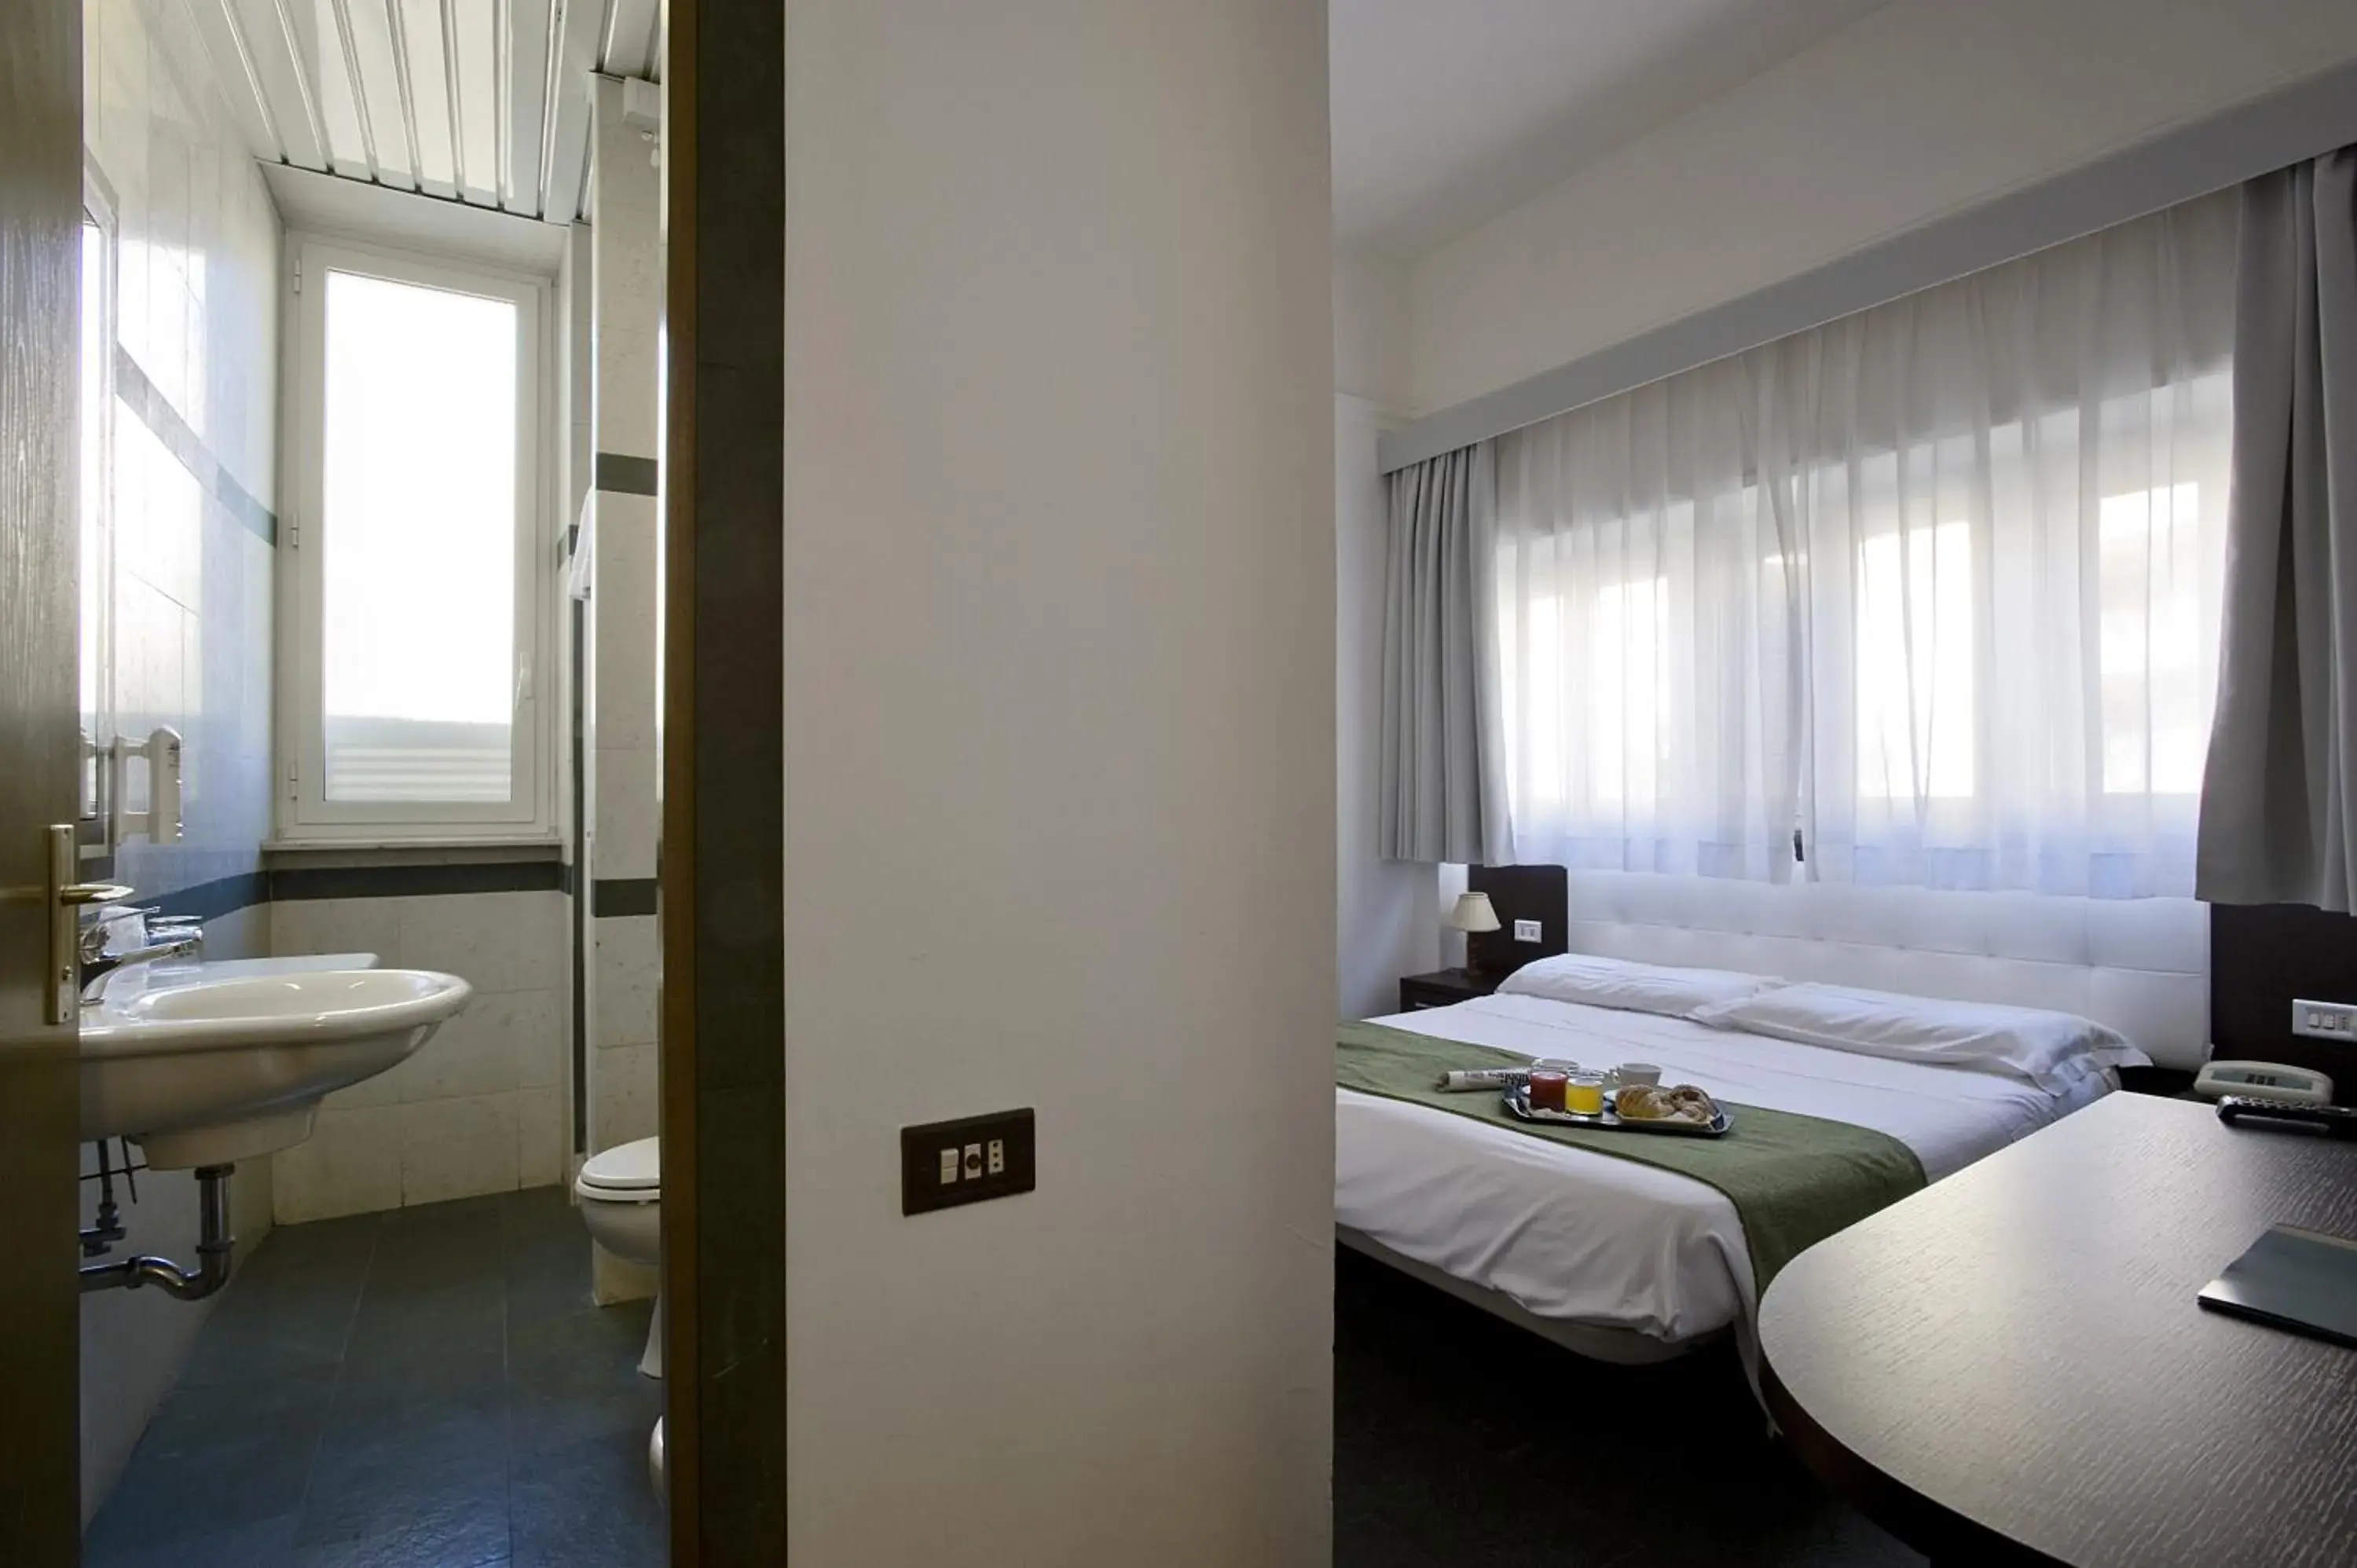 Photo of the whole room, Bathroom in Dipendenza Hotel Bellavista